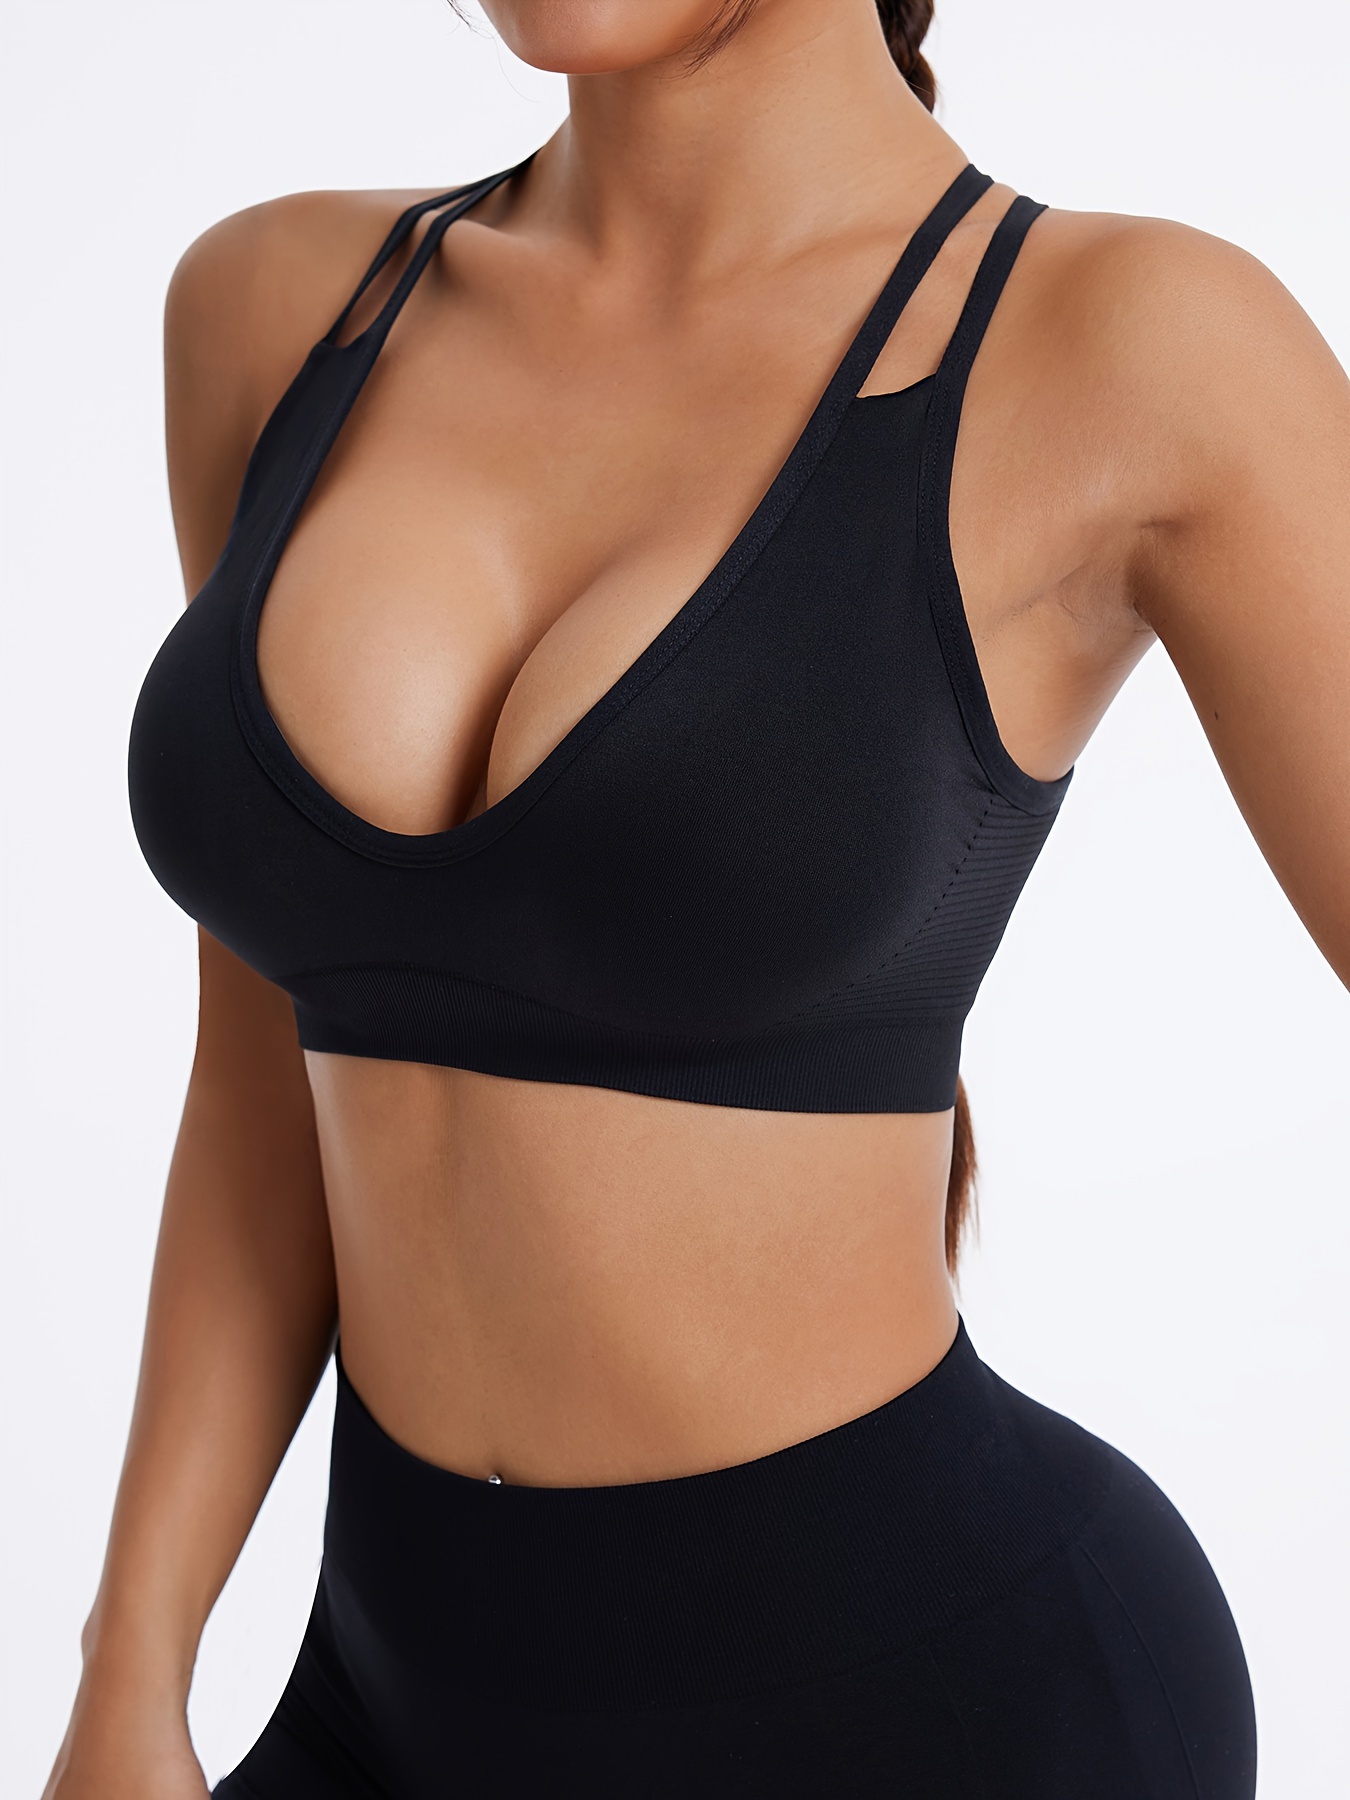 Yoga vest style adjustable sports bra for women shockproof running